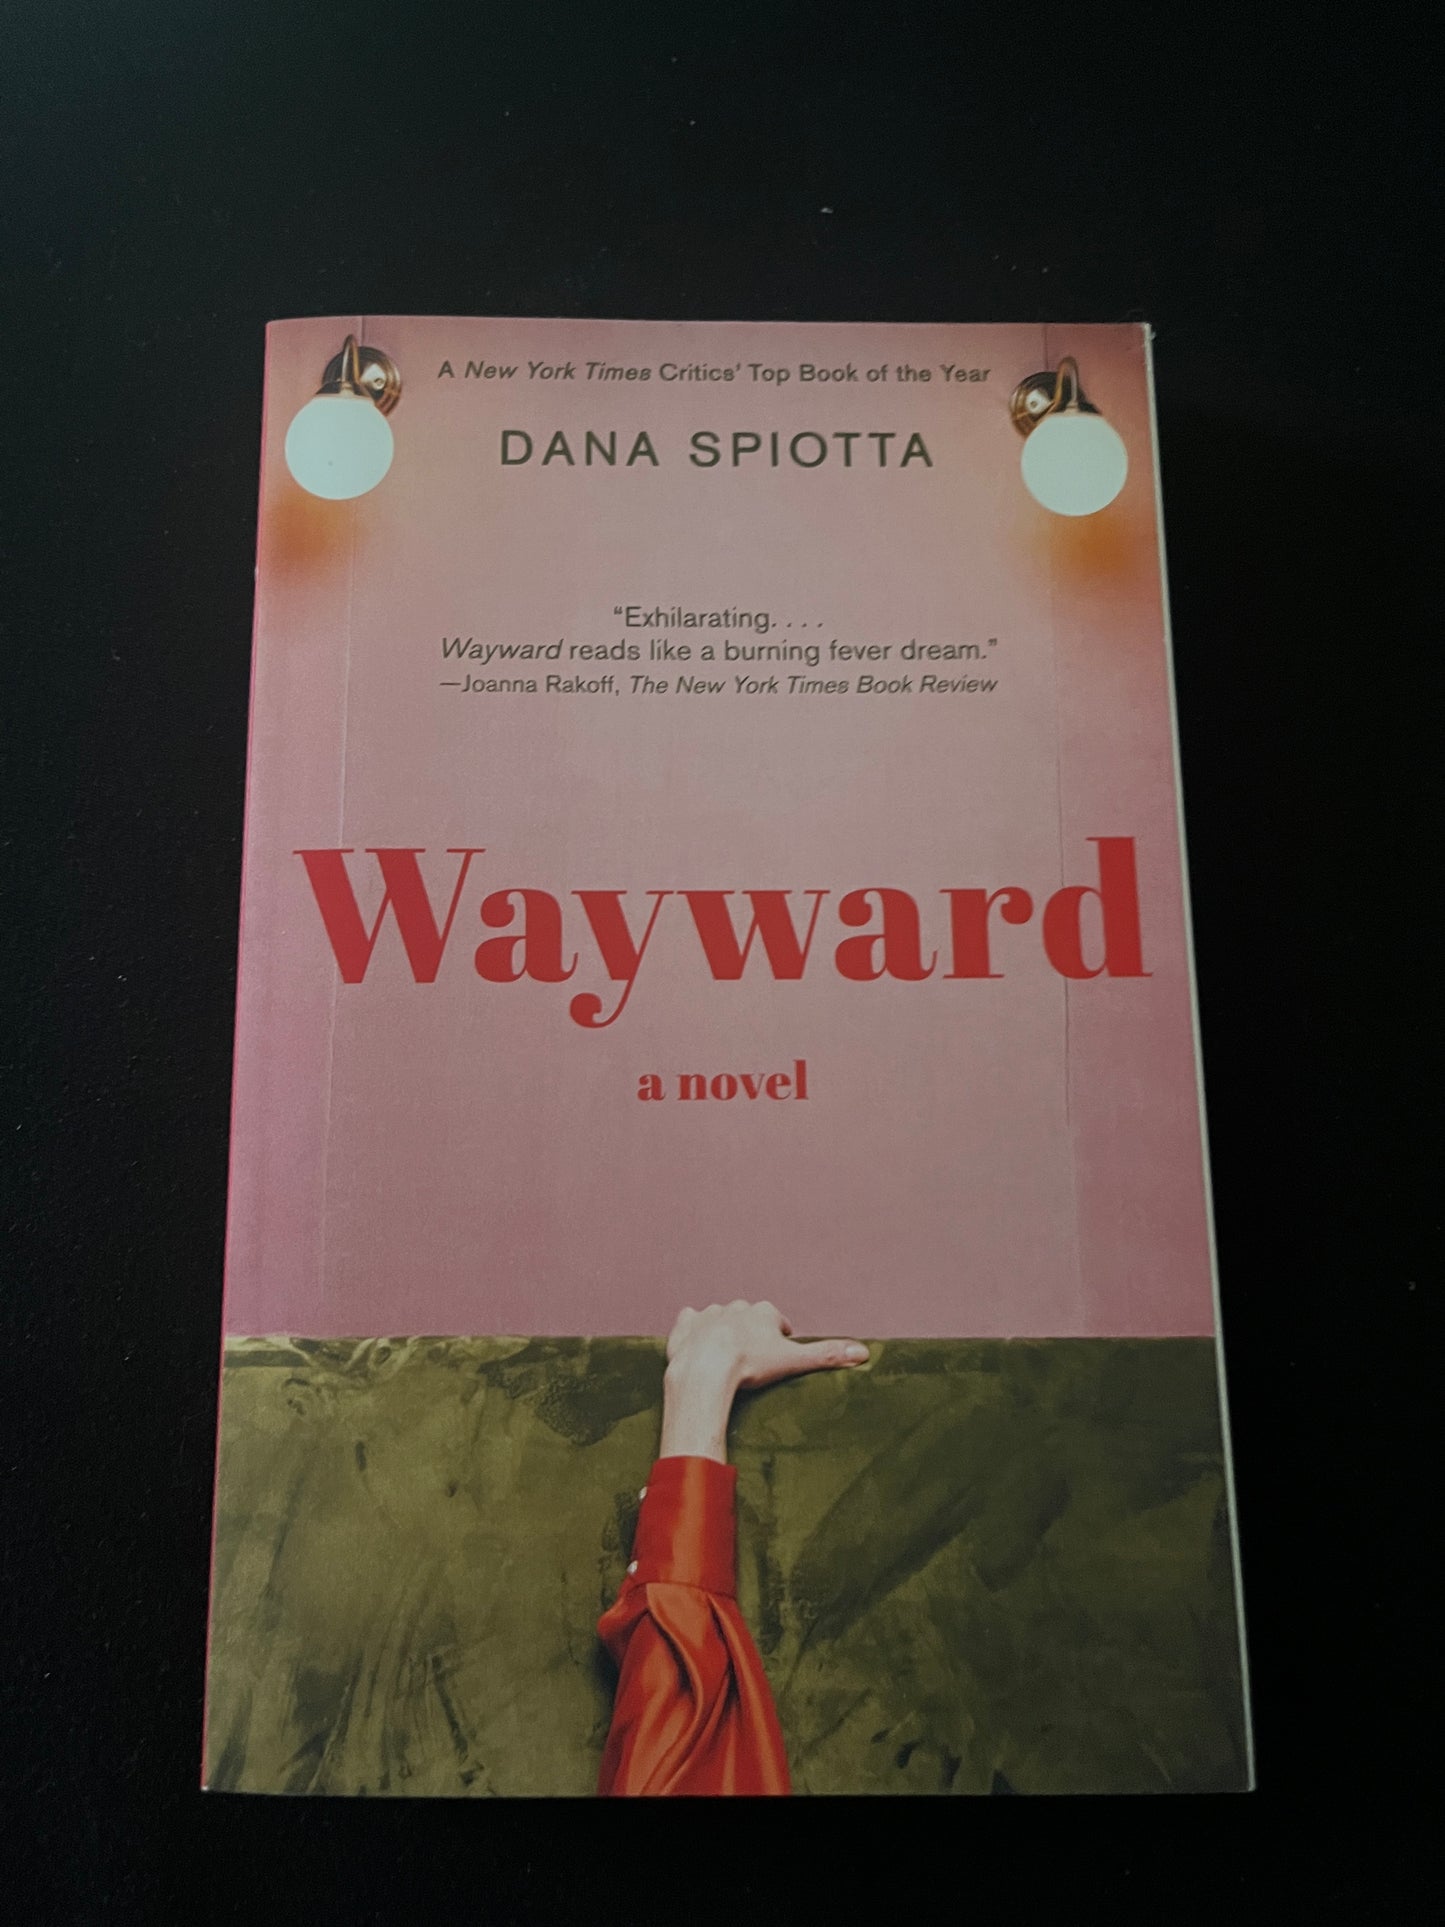 WAYWARD by Dana Spiotta